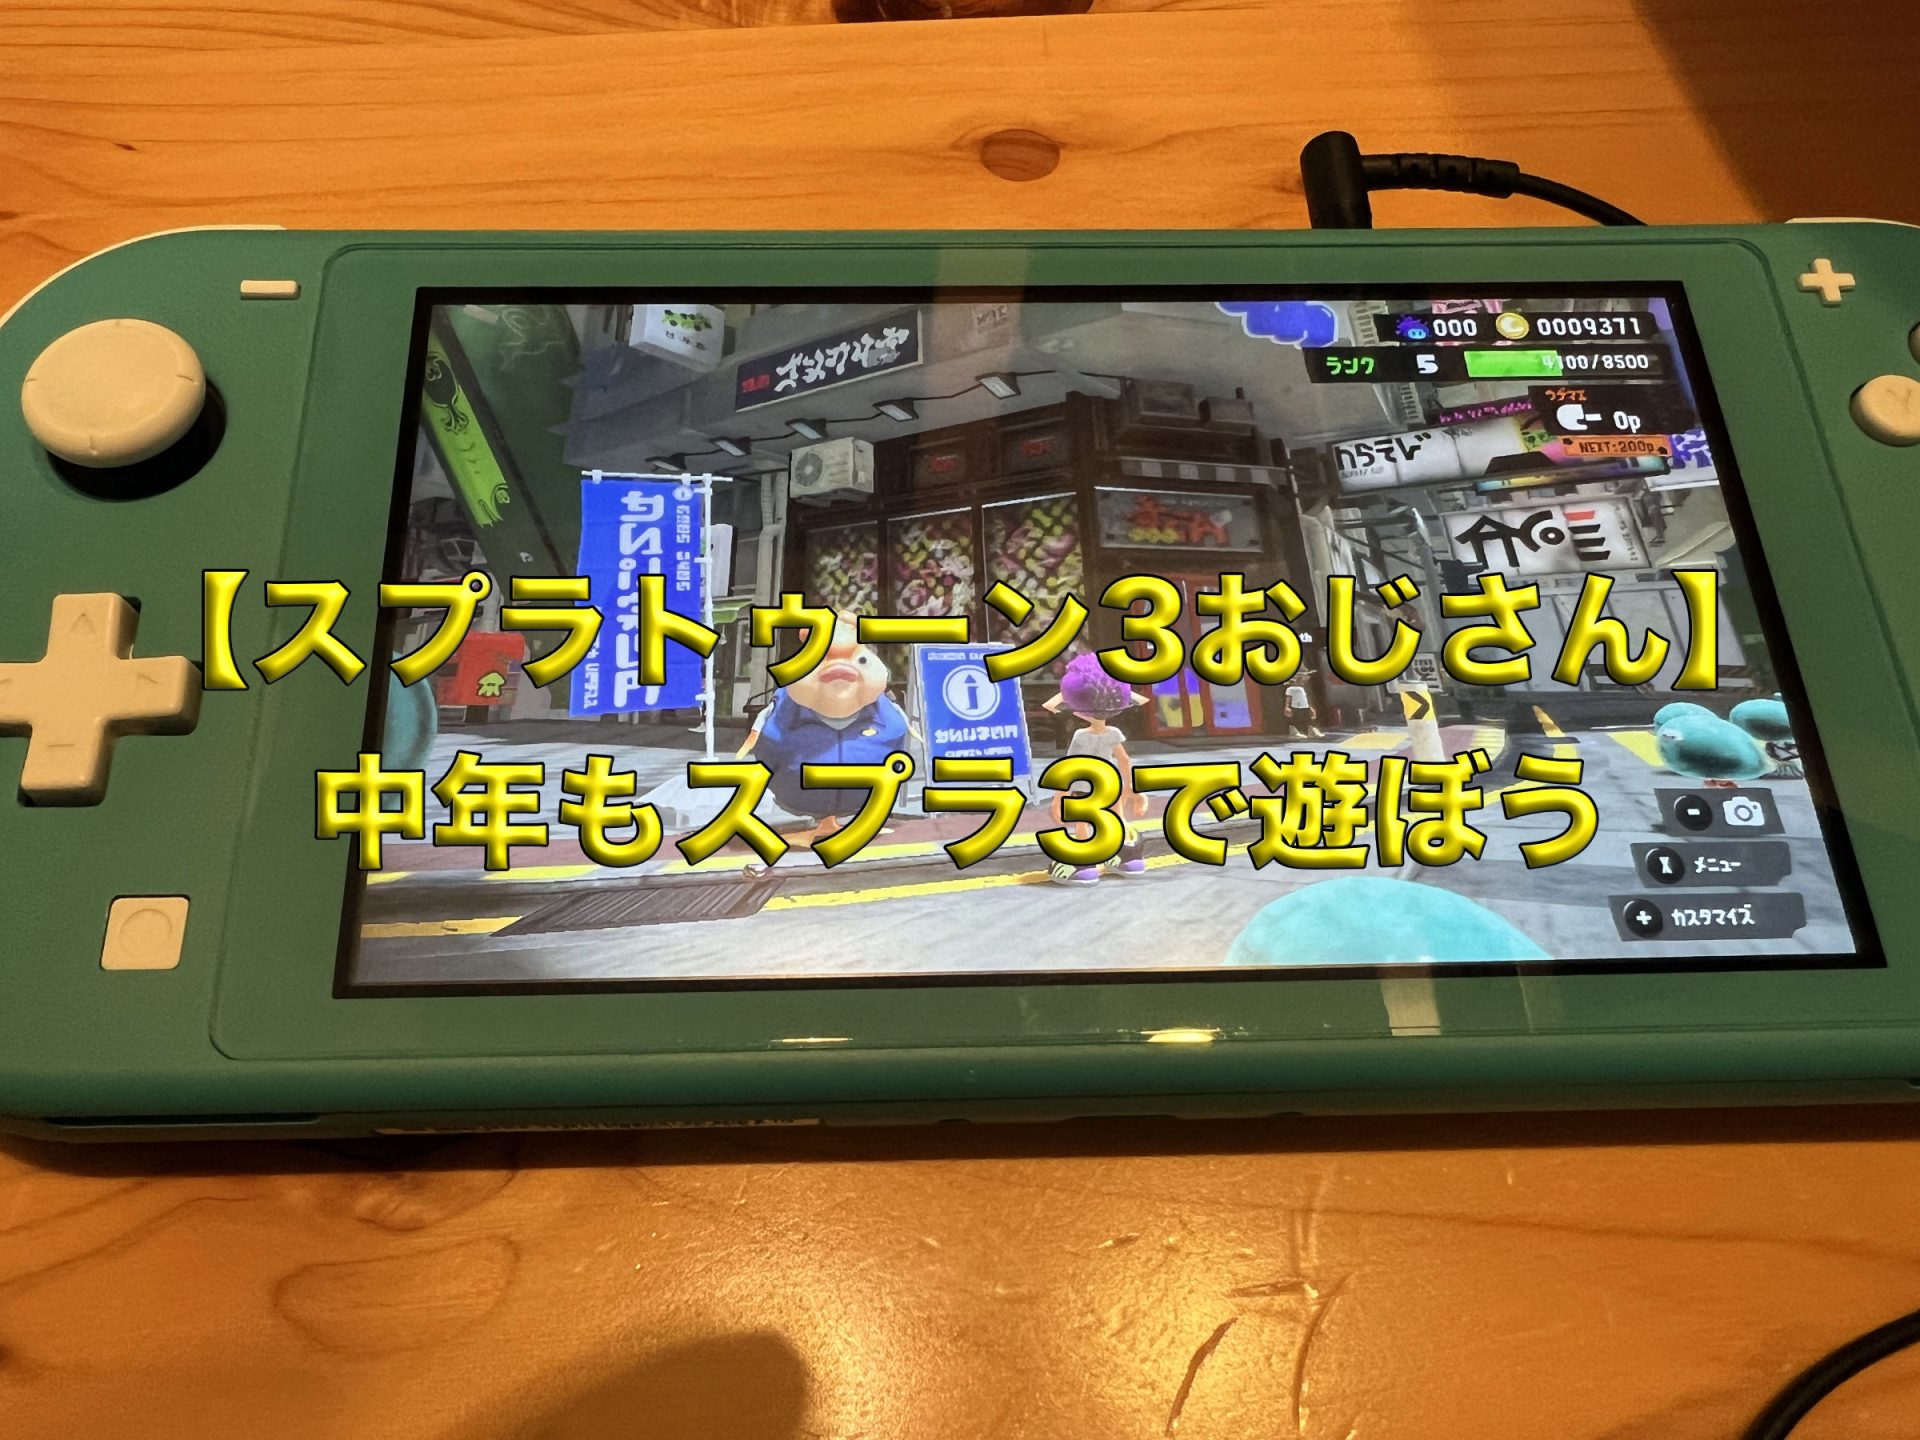 Nintendo SwitchのプロコントローラはUSB Type C - Type C ケーブルで 